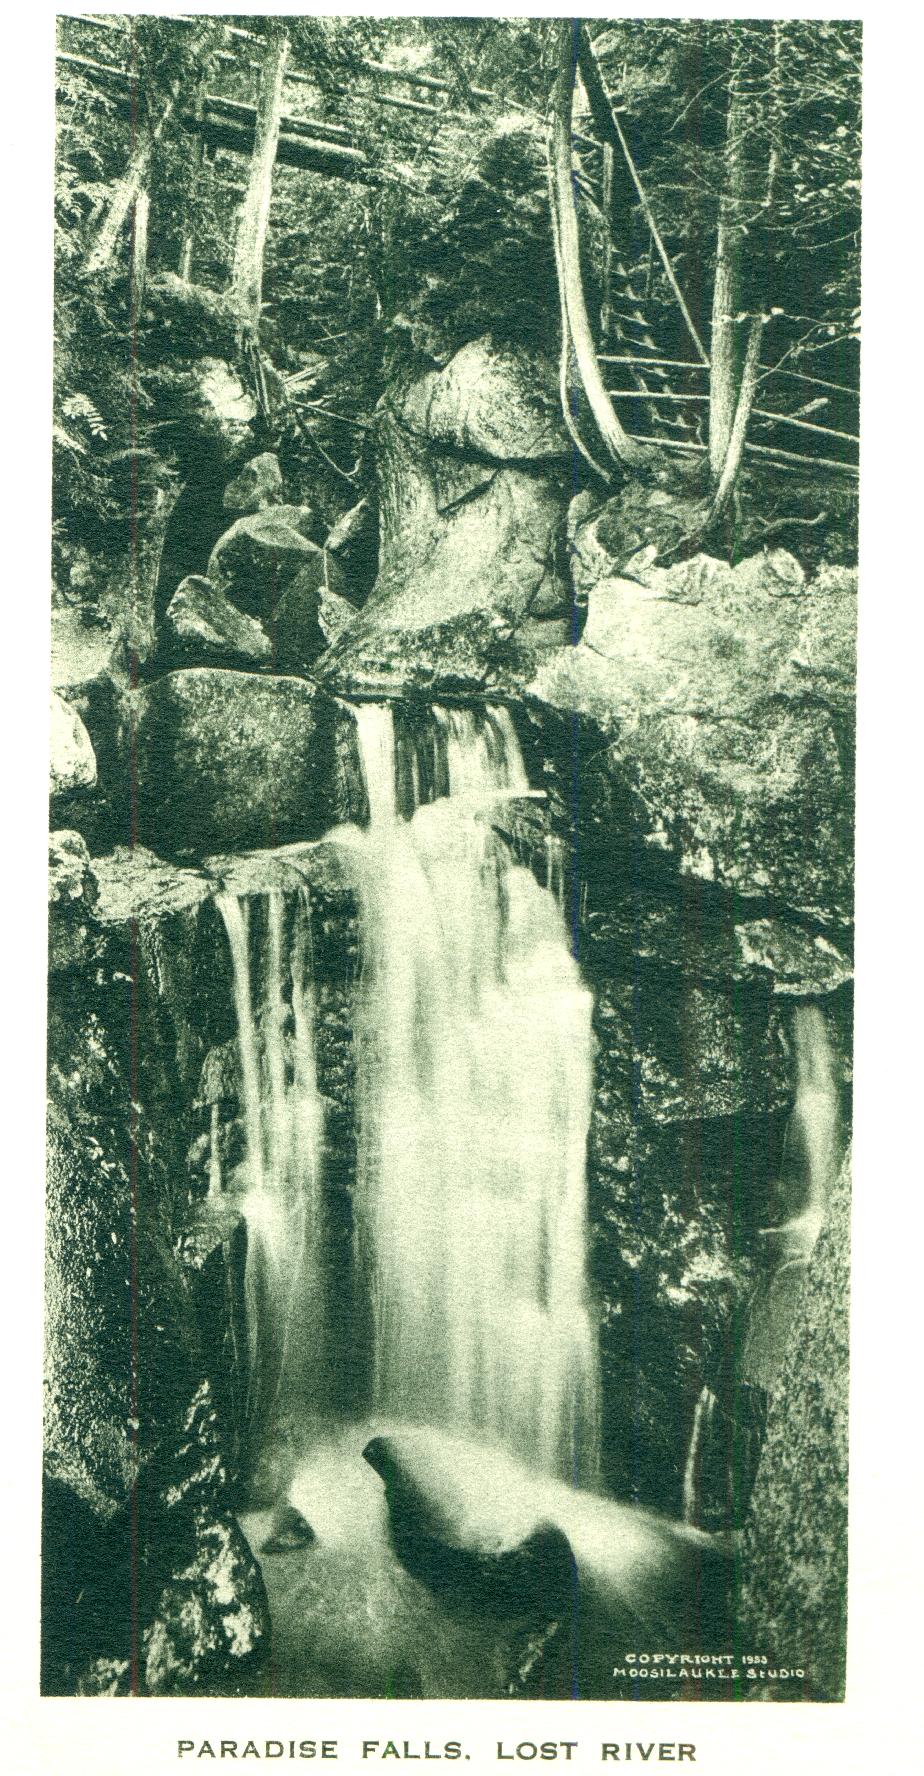 Paradise Falls - Lost River - 1933